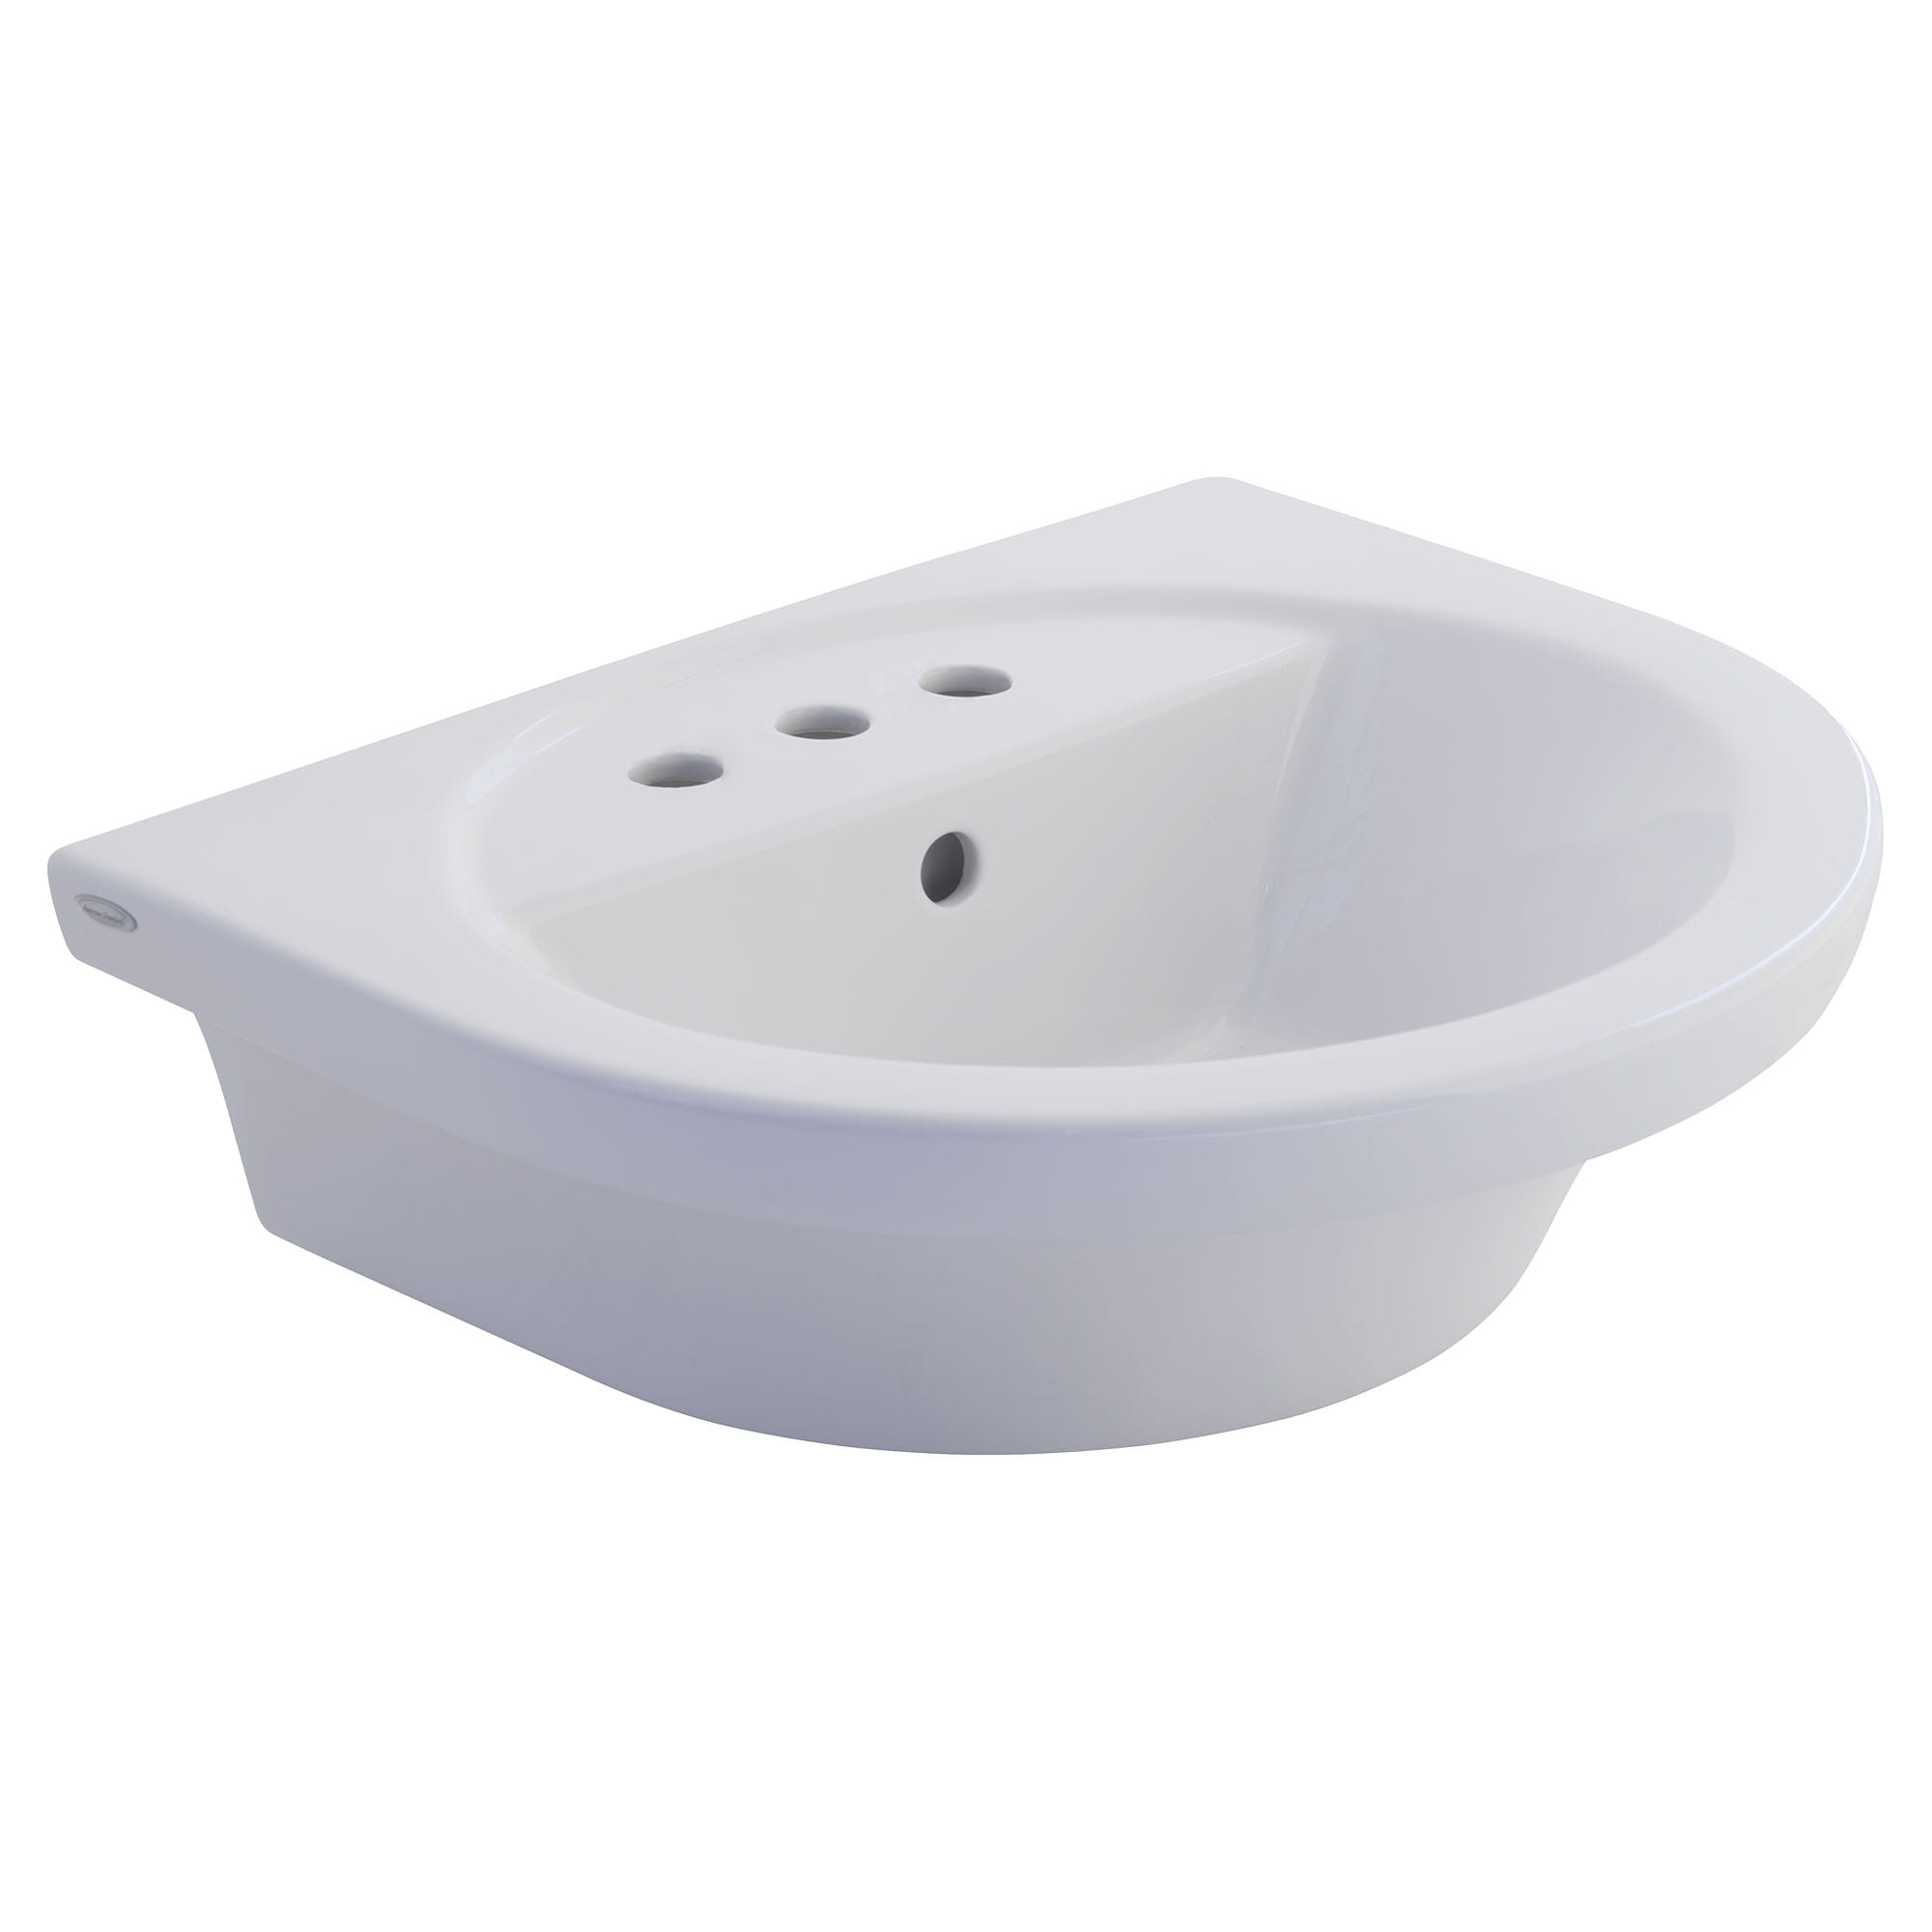 Tropic Petite 8 Inch Widespread Pedestal Sink Top WHITE